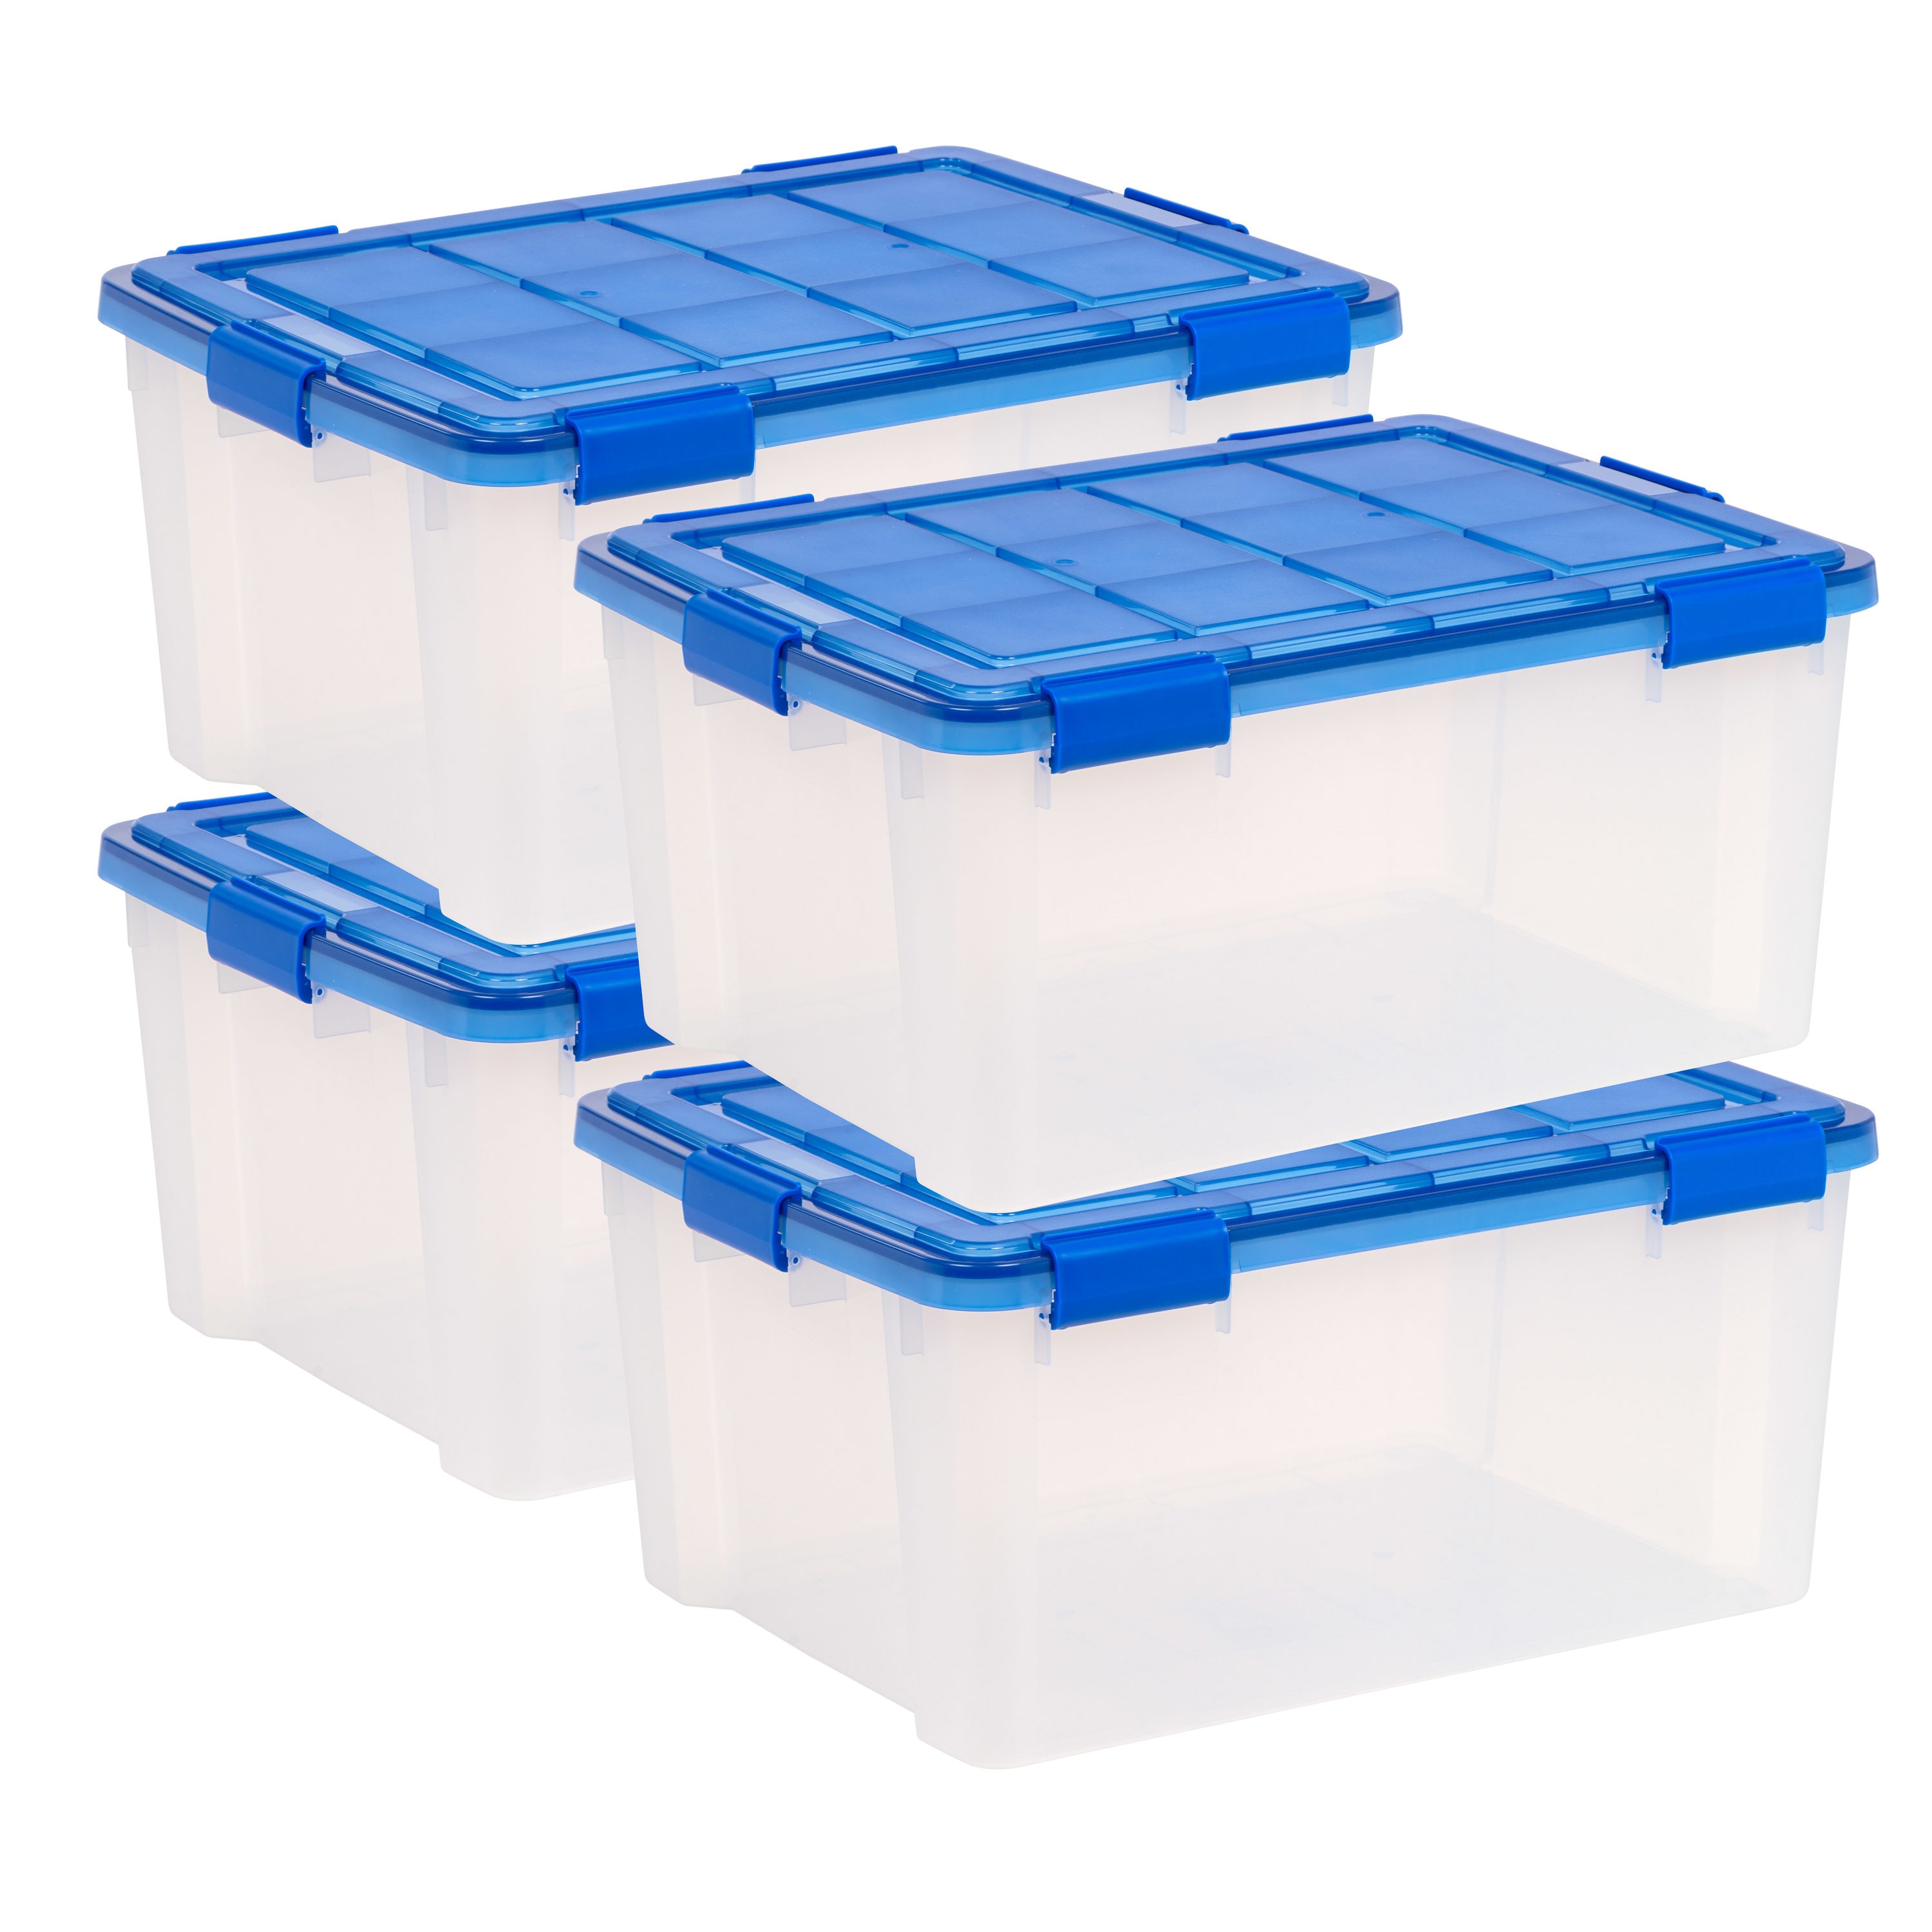 IRIS USA 50 Quart Clear Plastic Underbed Latched Stack Storage